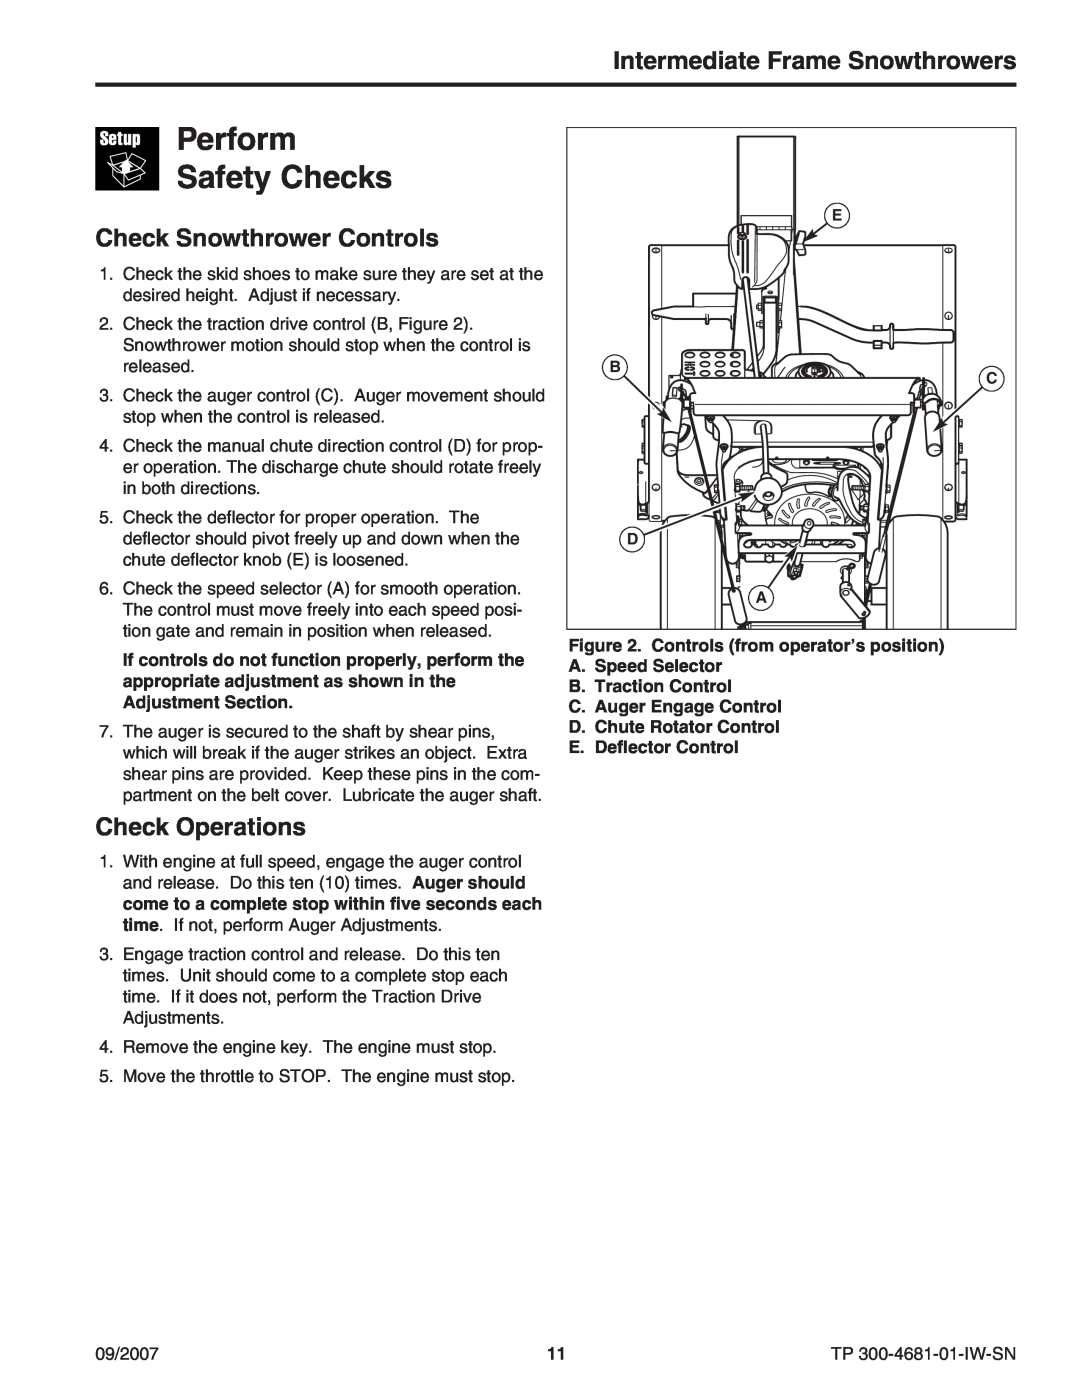 Simplicity SNP I1924E Check Snowthrower Controls, Check Operations, Perform Safety Checks, Intermediate Frame Snowthrowers 